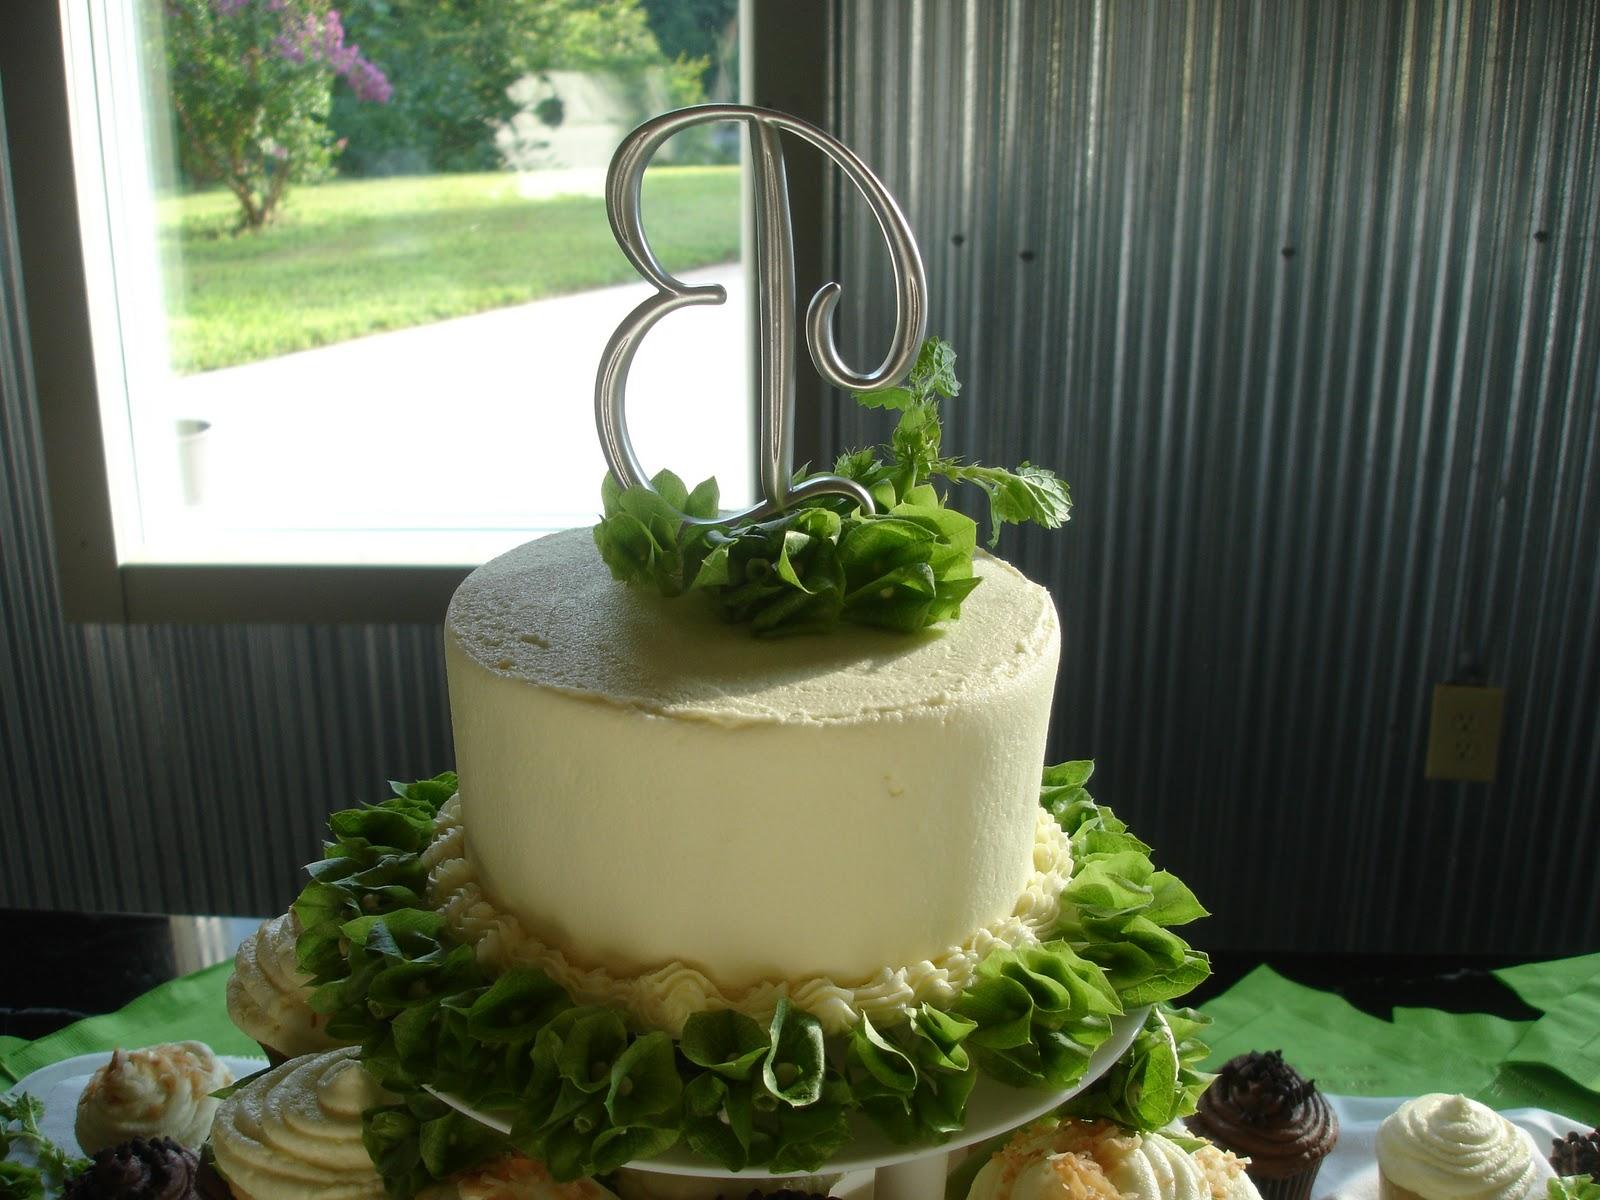 My Wedding Cupcake Tower